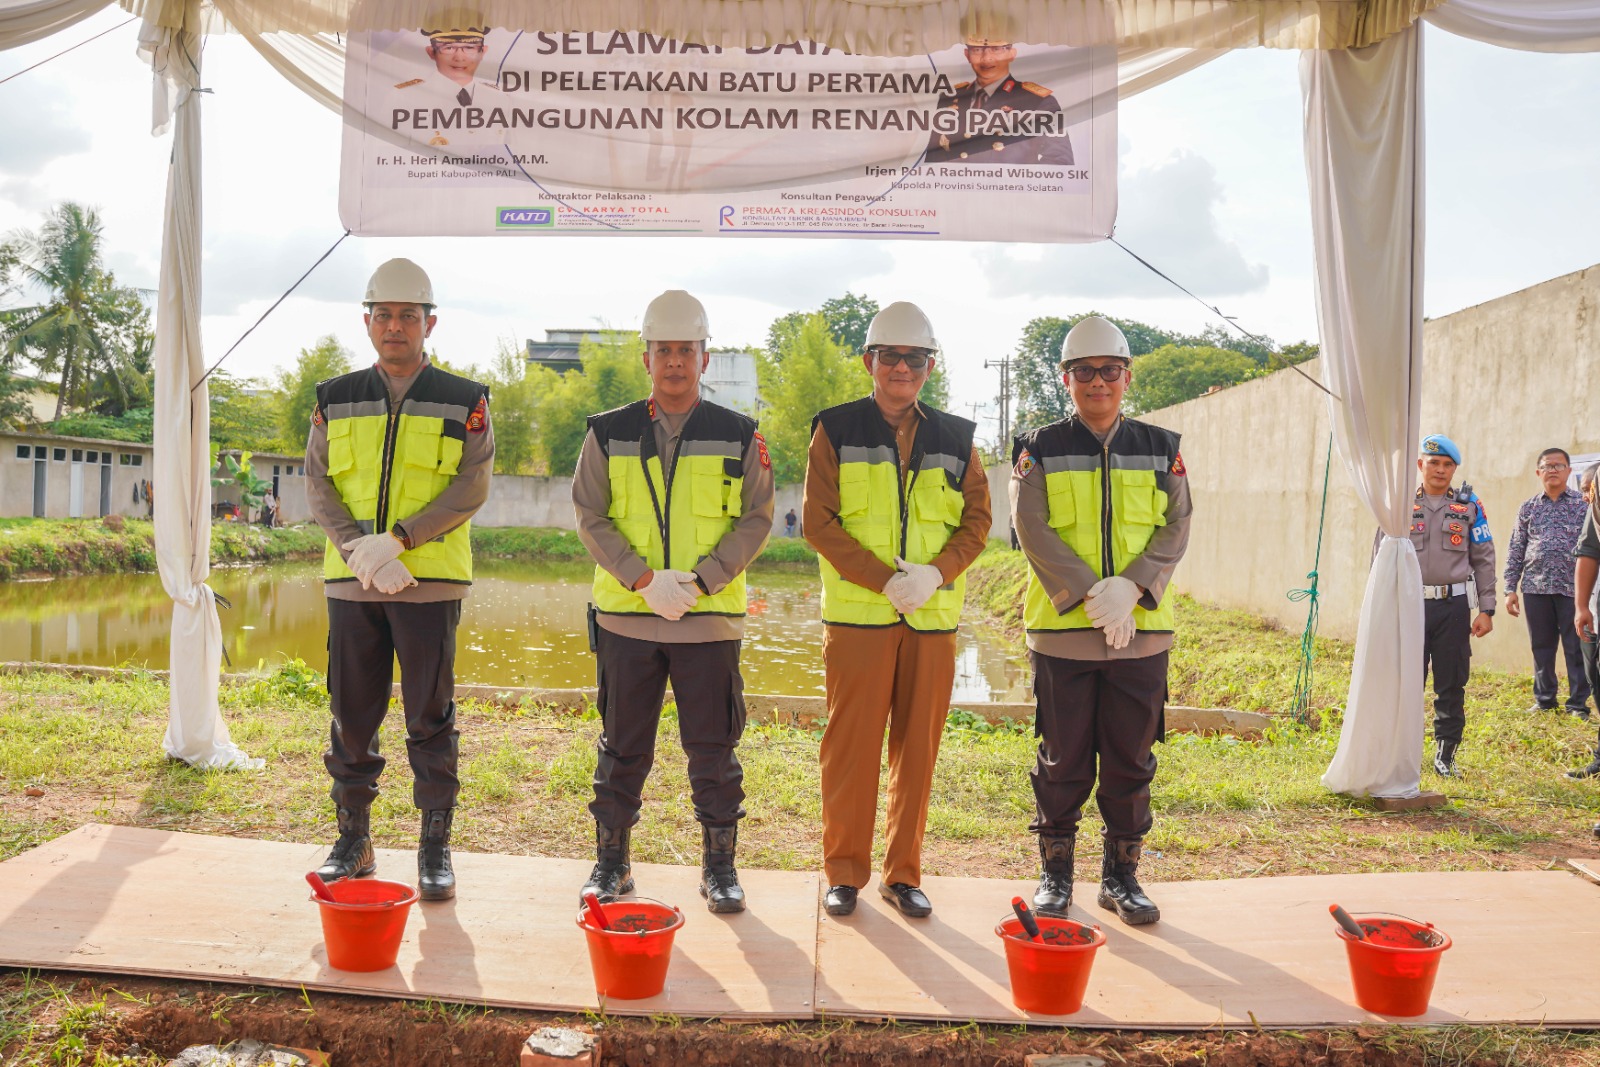 Polda Sumatera Selatan Terima Hibah Pembangunan Kolam Renang di Komplek Pakri Palembang